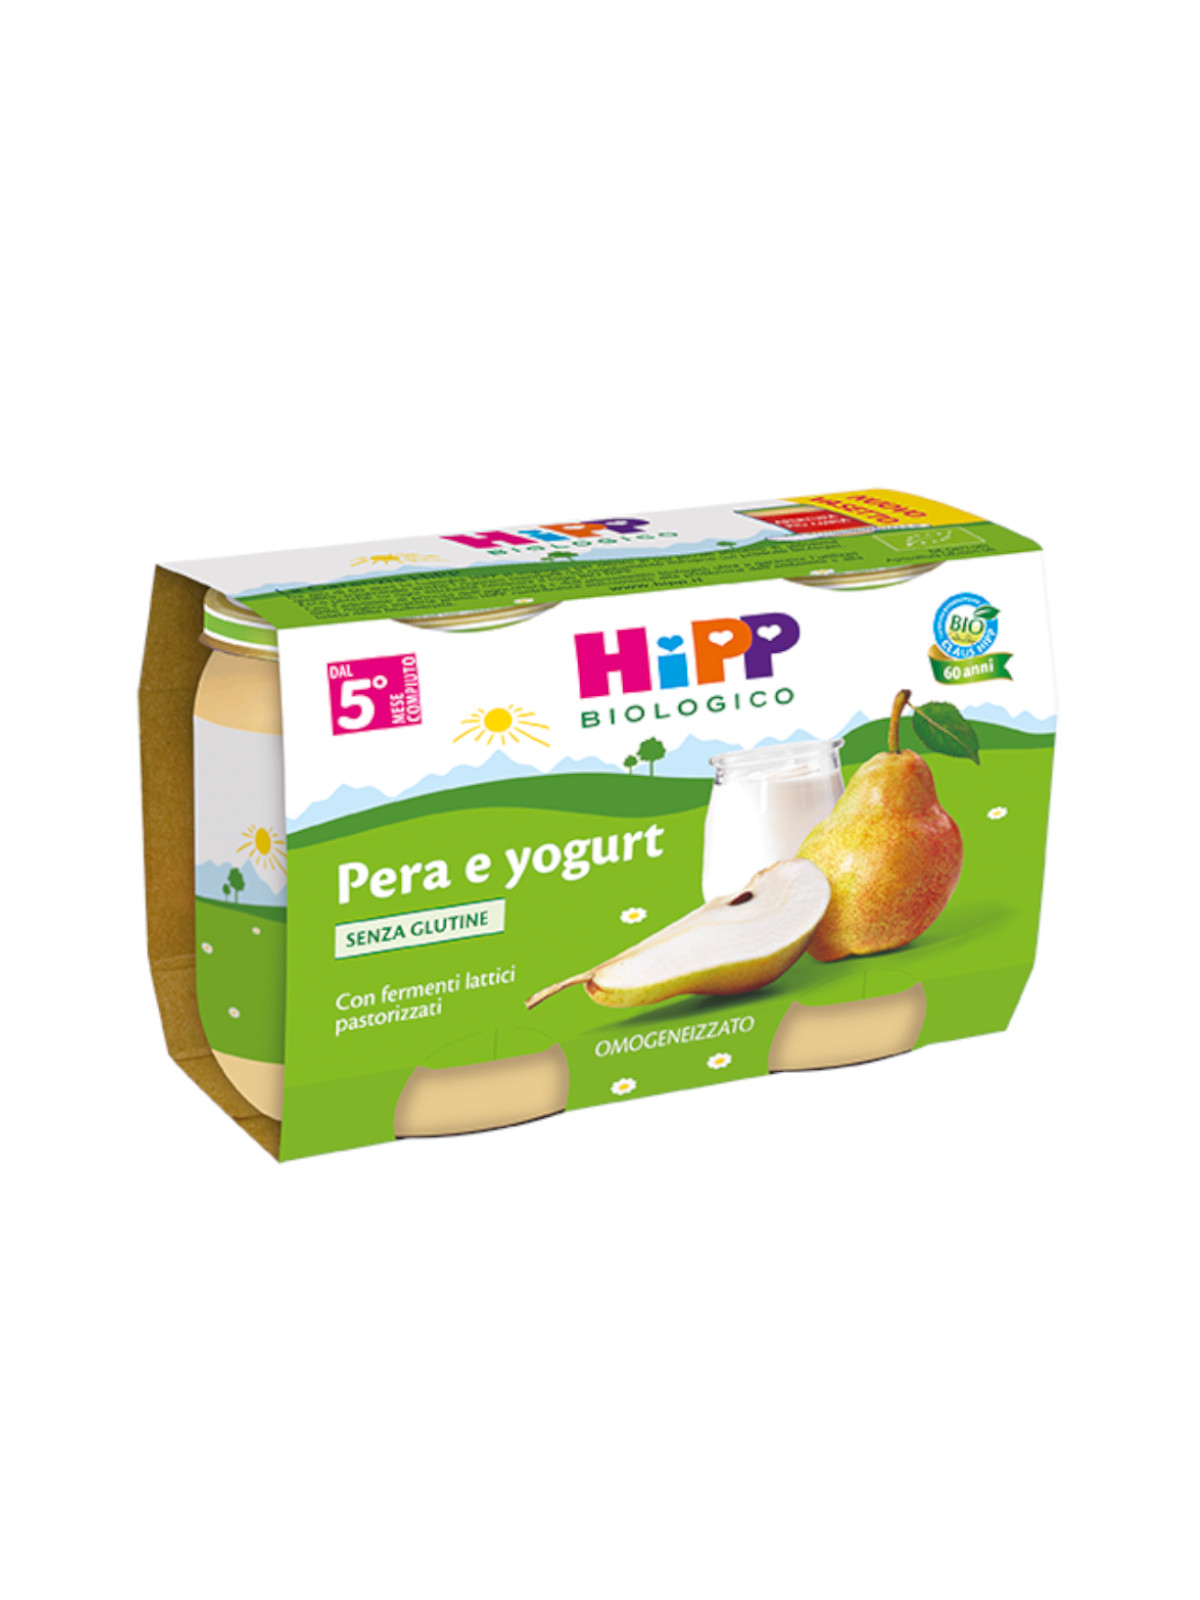 Hipp - omogeneizzato pera e yogurt 2x125g - Hipp